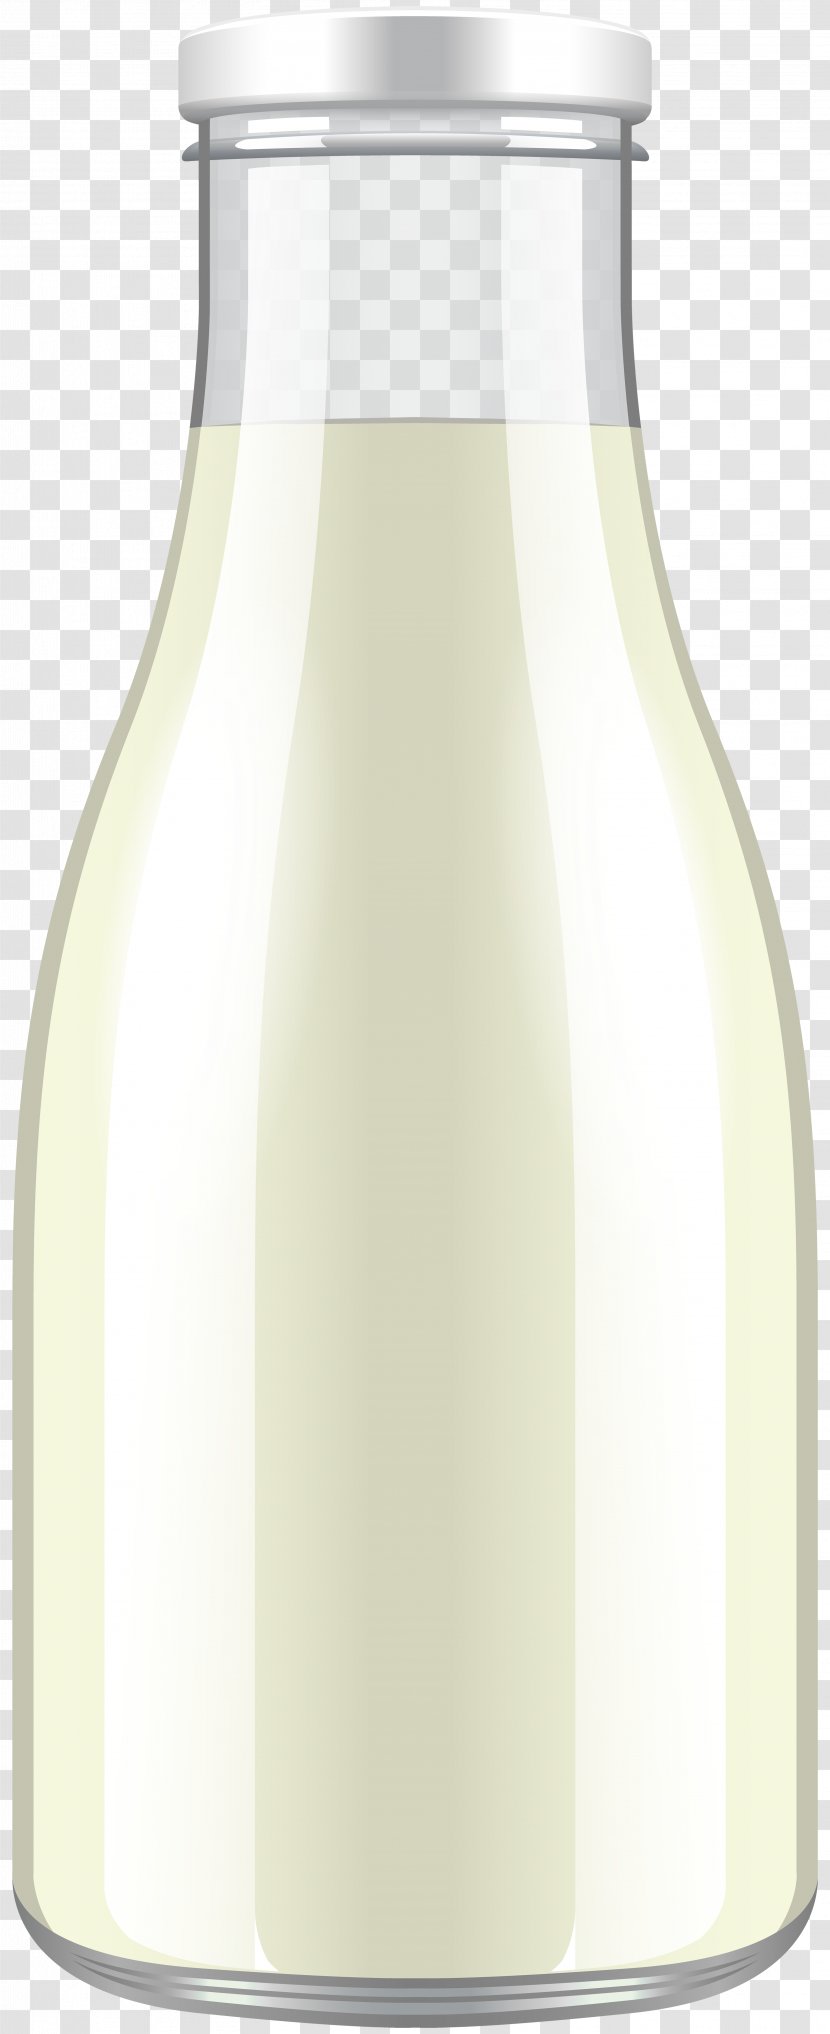 Bottle Glass - Of Milk Clip Art Image Transparent PNG